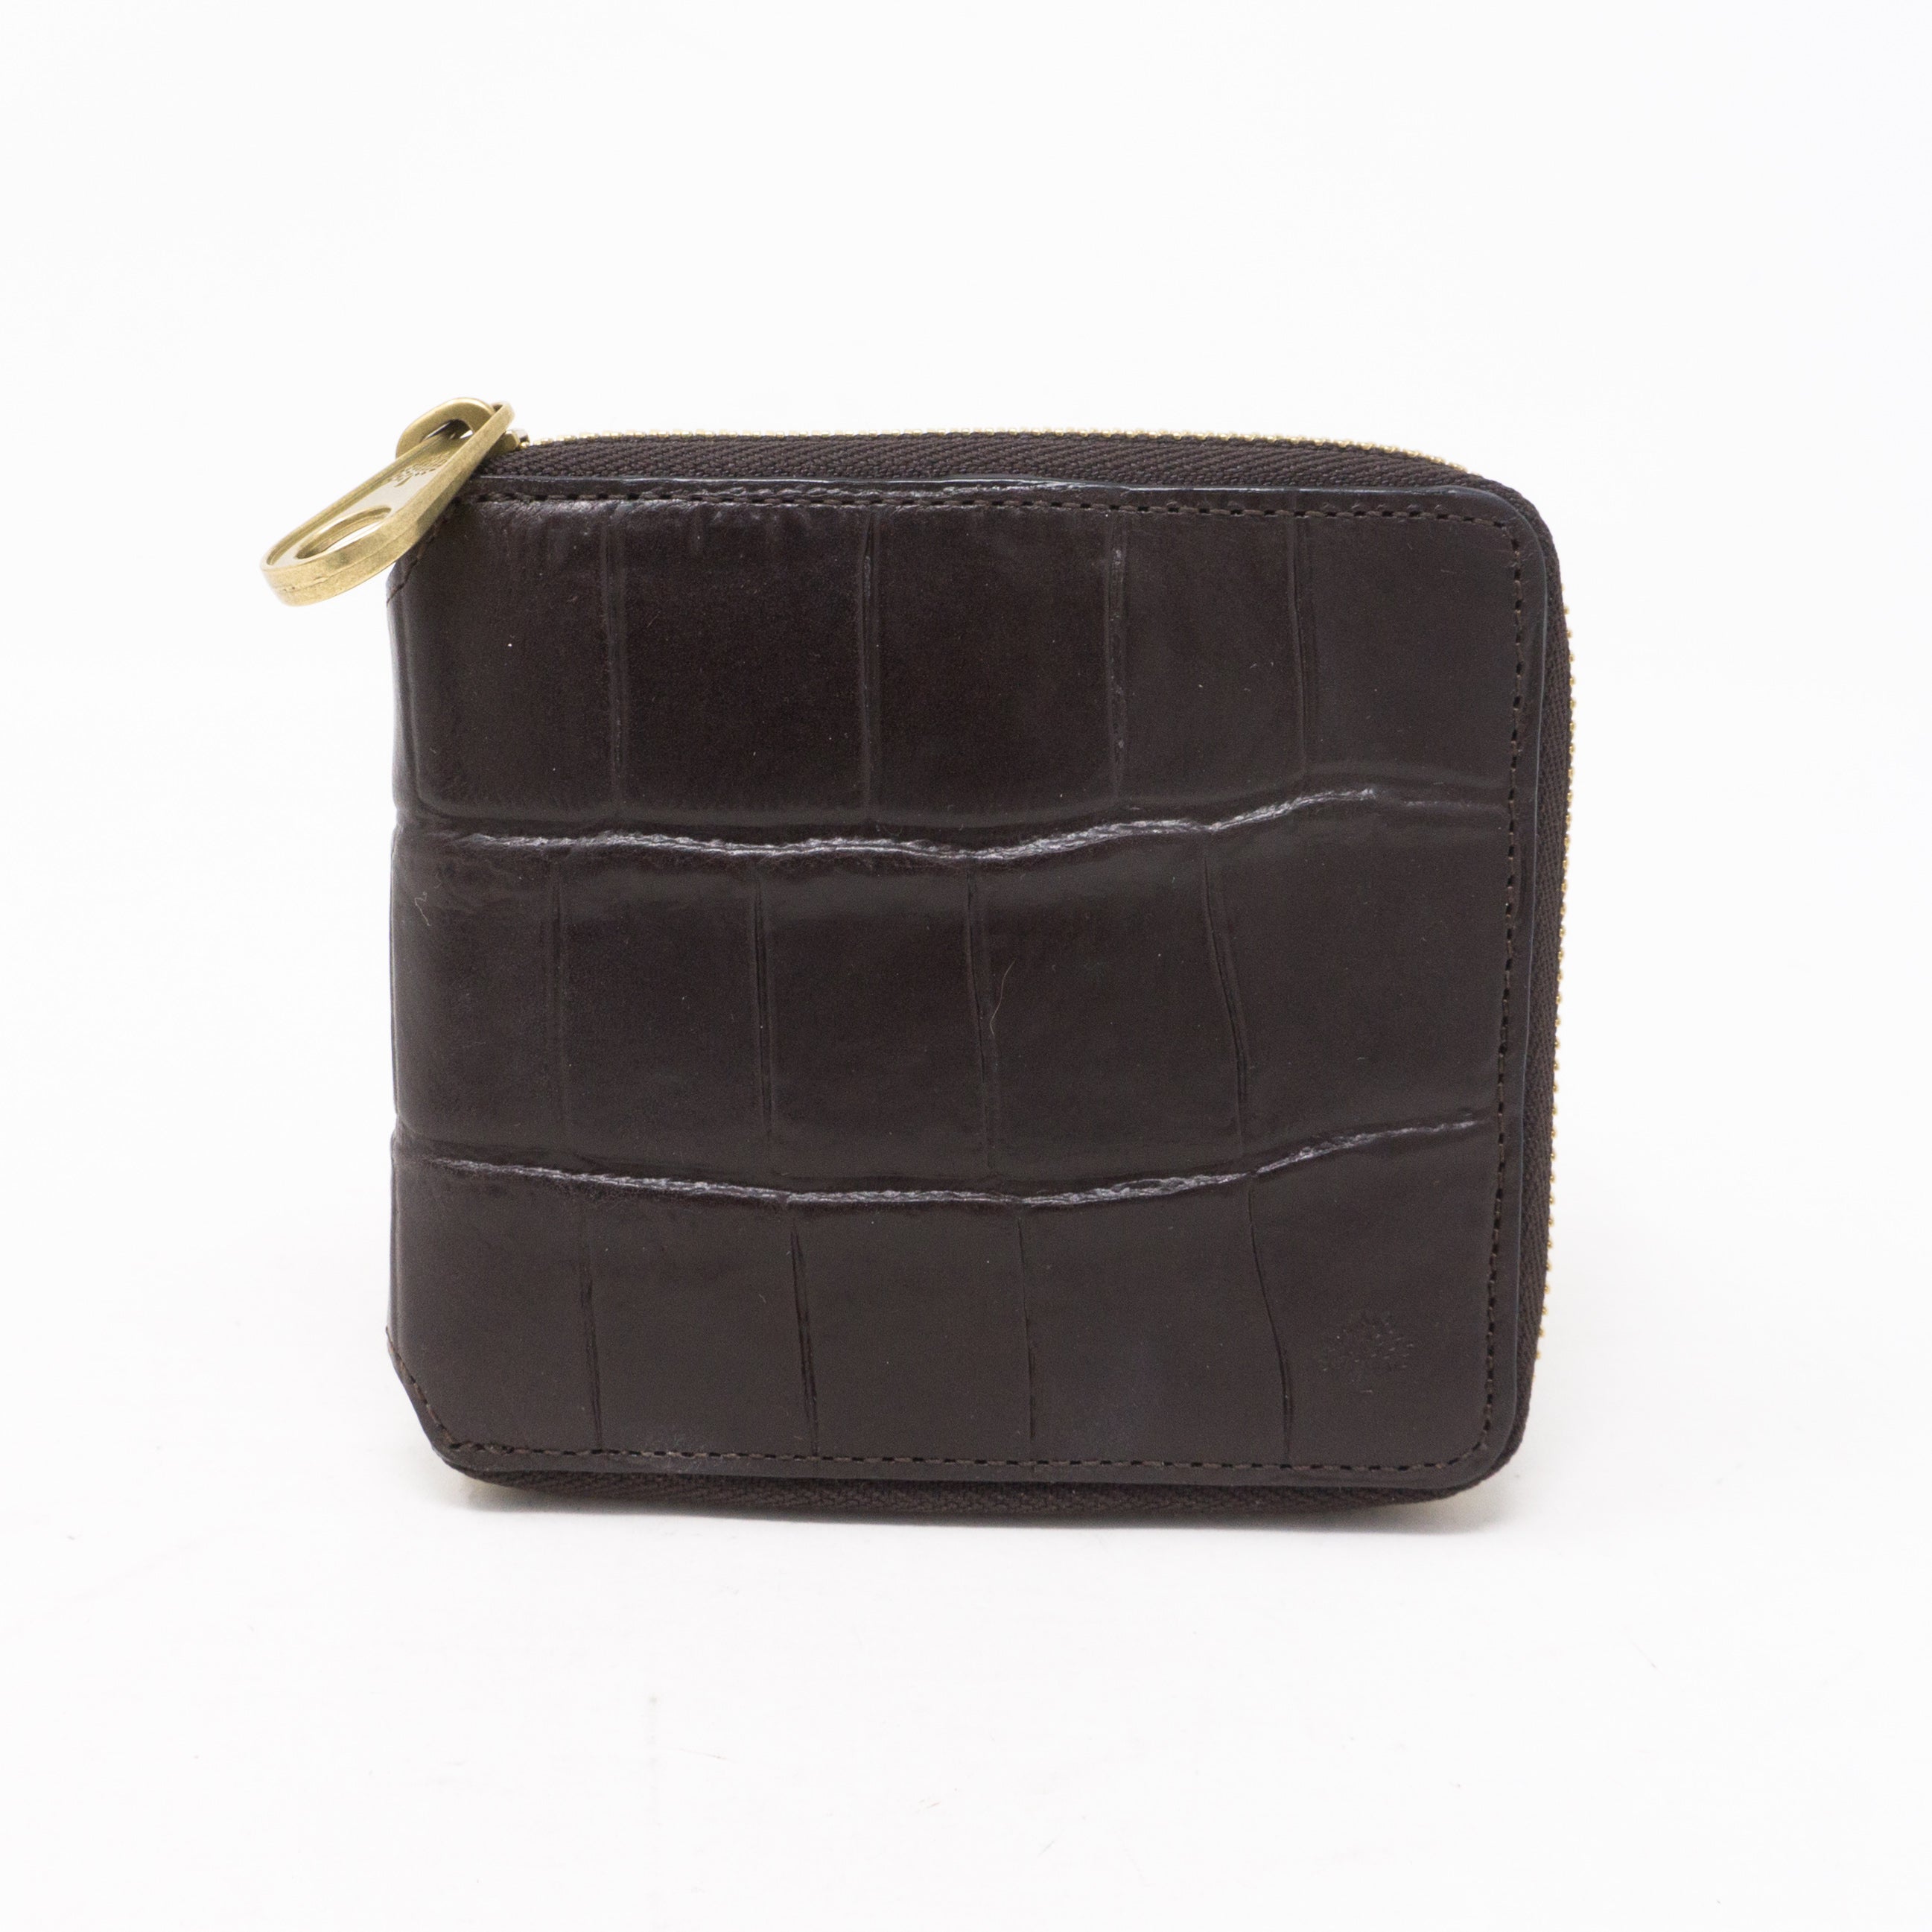 MULBERRY - Heart leather coin purse | Selfridges.com